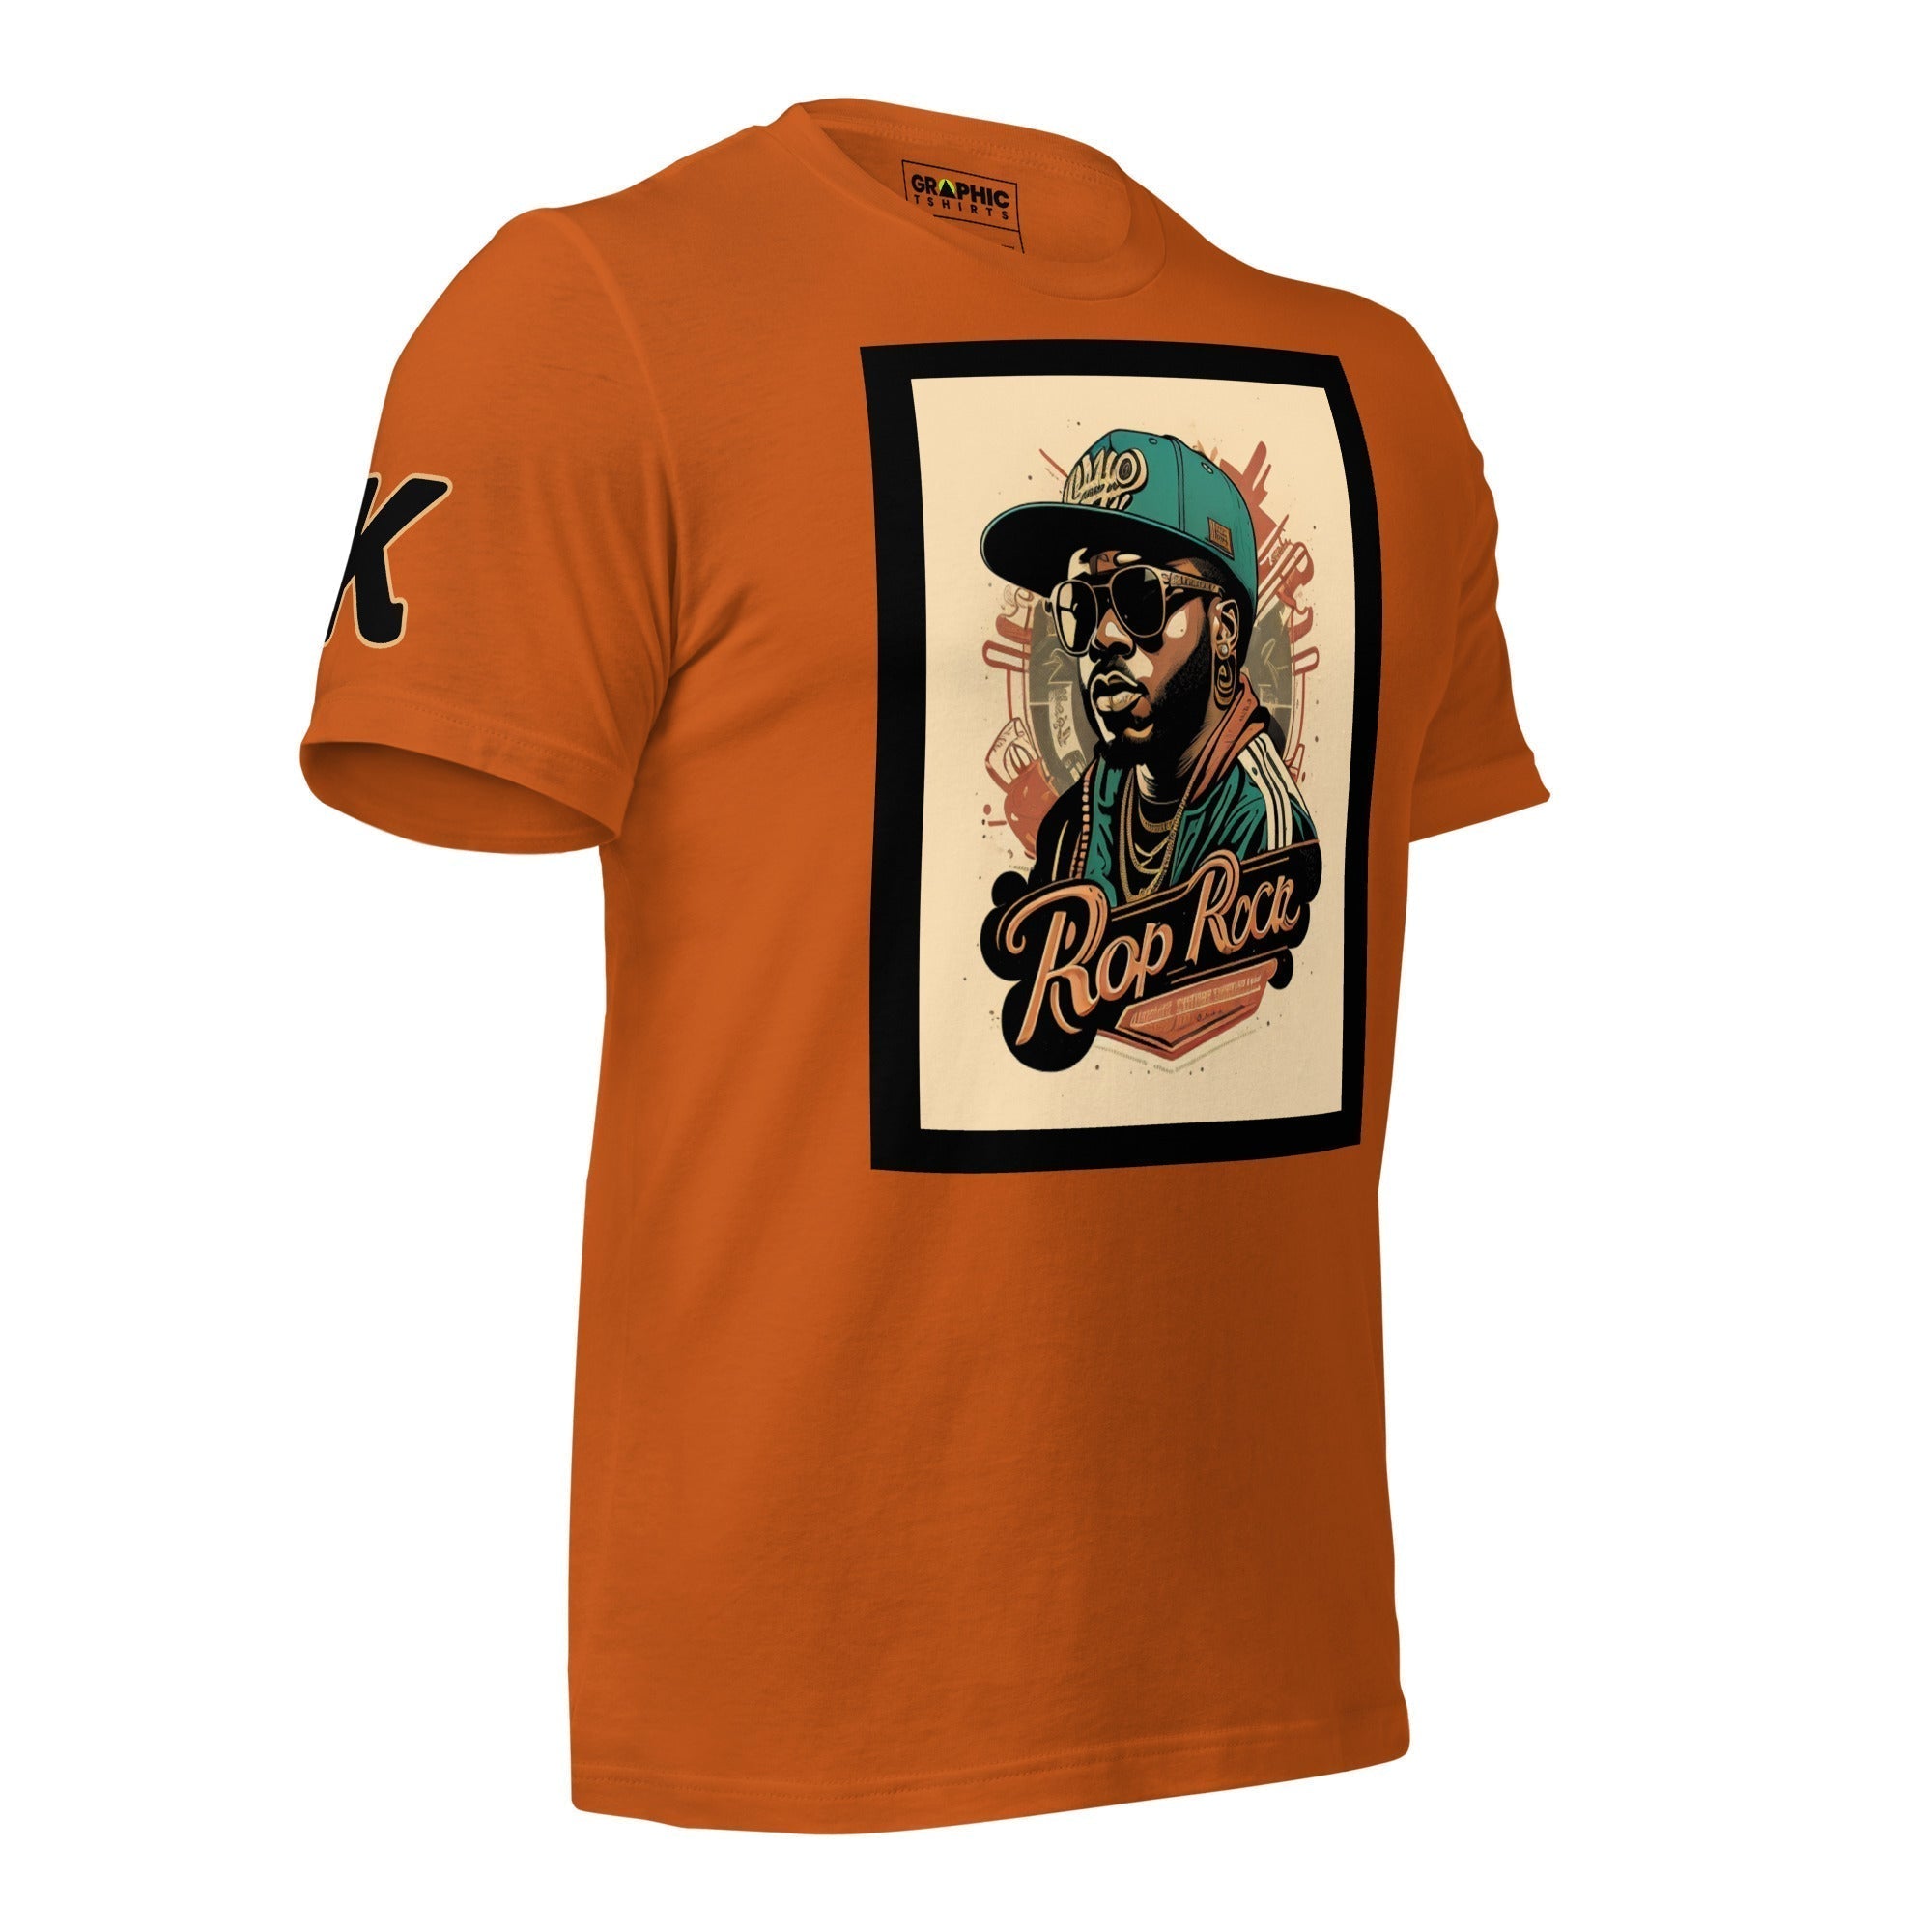 Unisex Crew Neck T-Shirt - Vintage Hip Hop Series v.20 - GRAPHIC T-SHIRTS